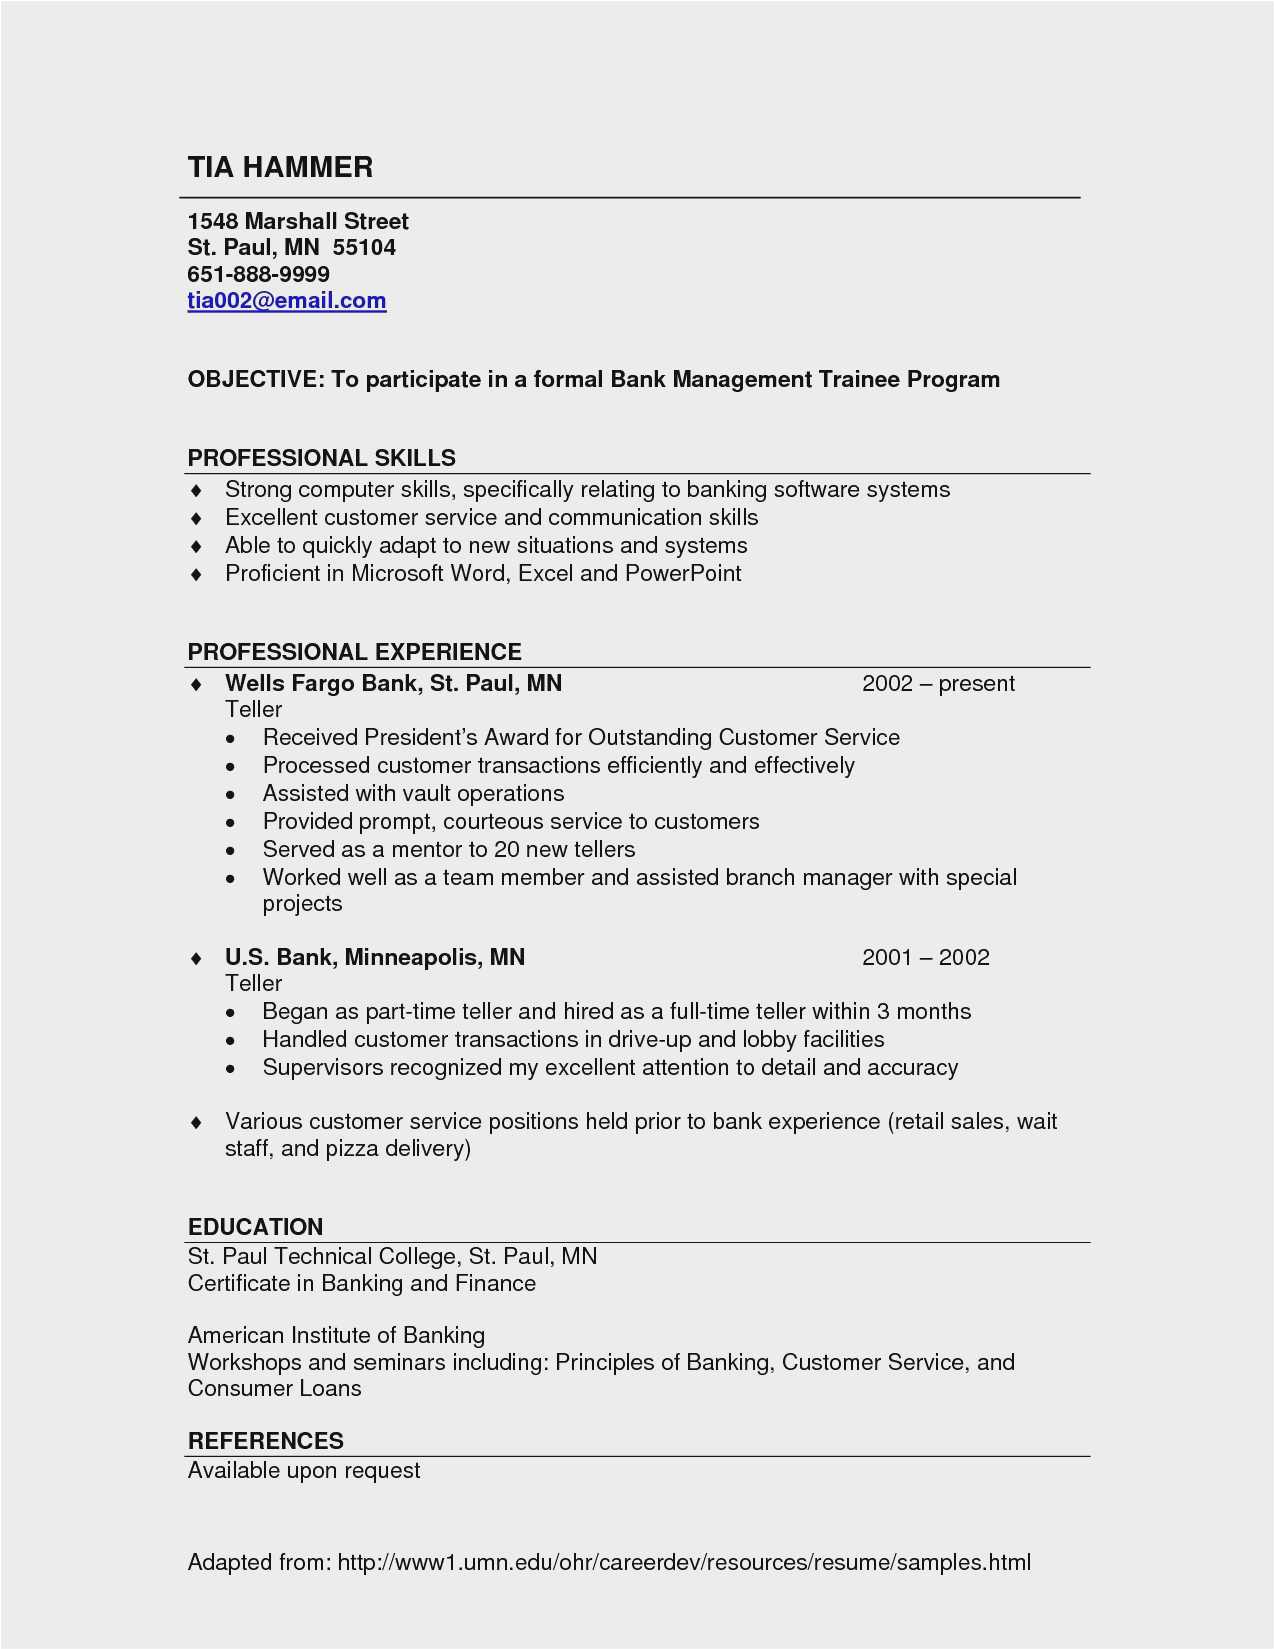 Sample Of Professional Skills In Resume Download 57 Resume Skills List Sample